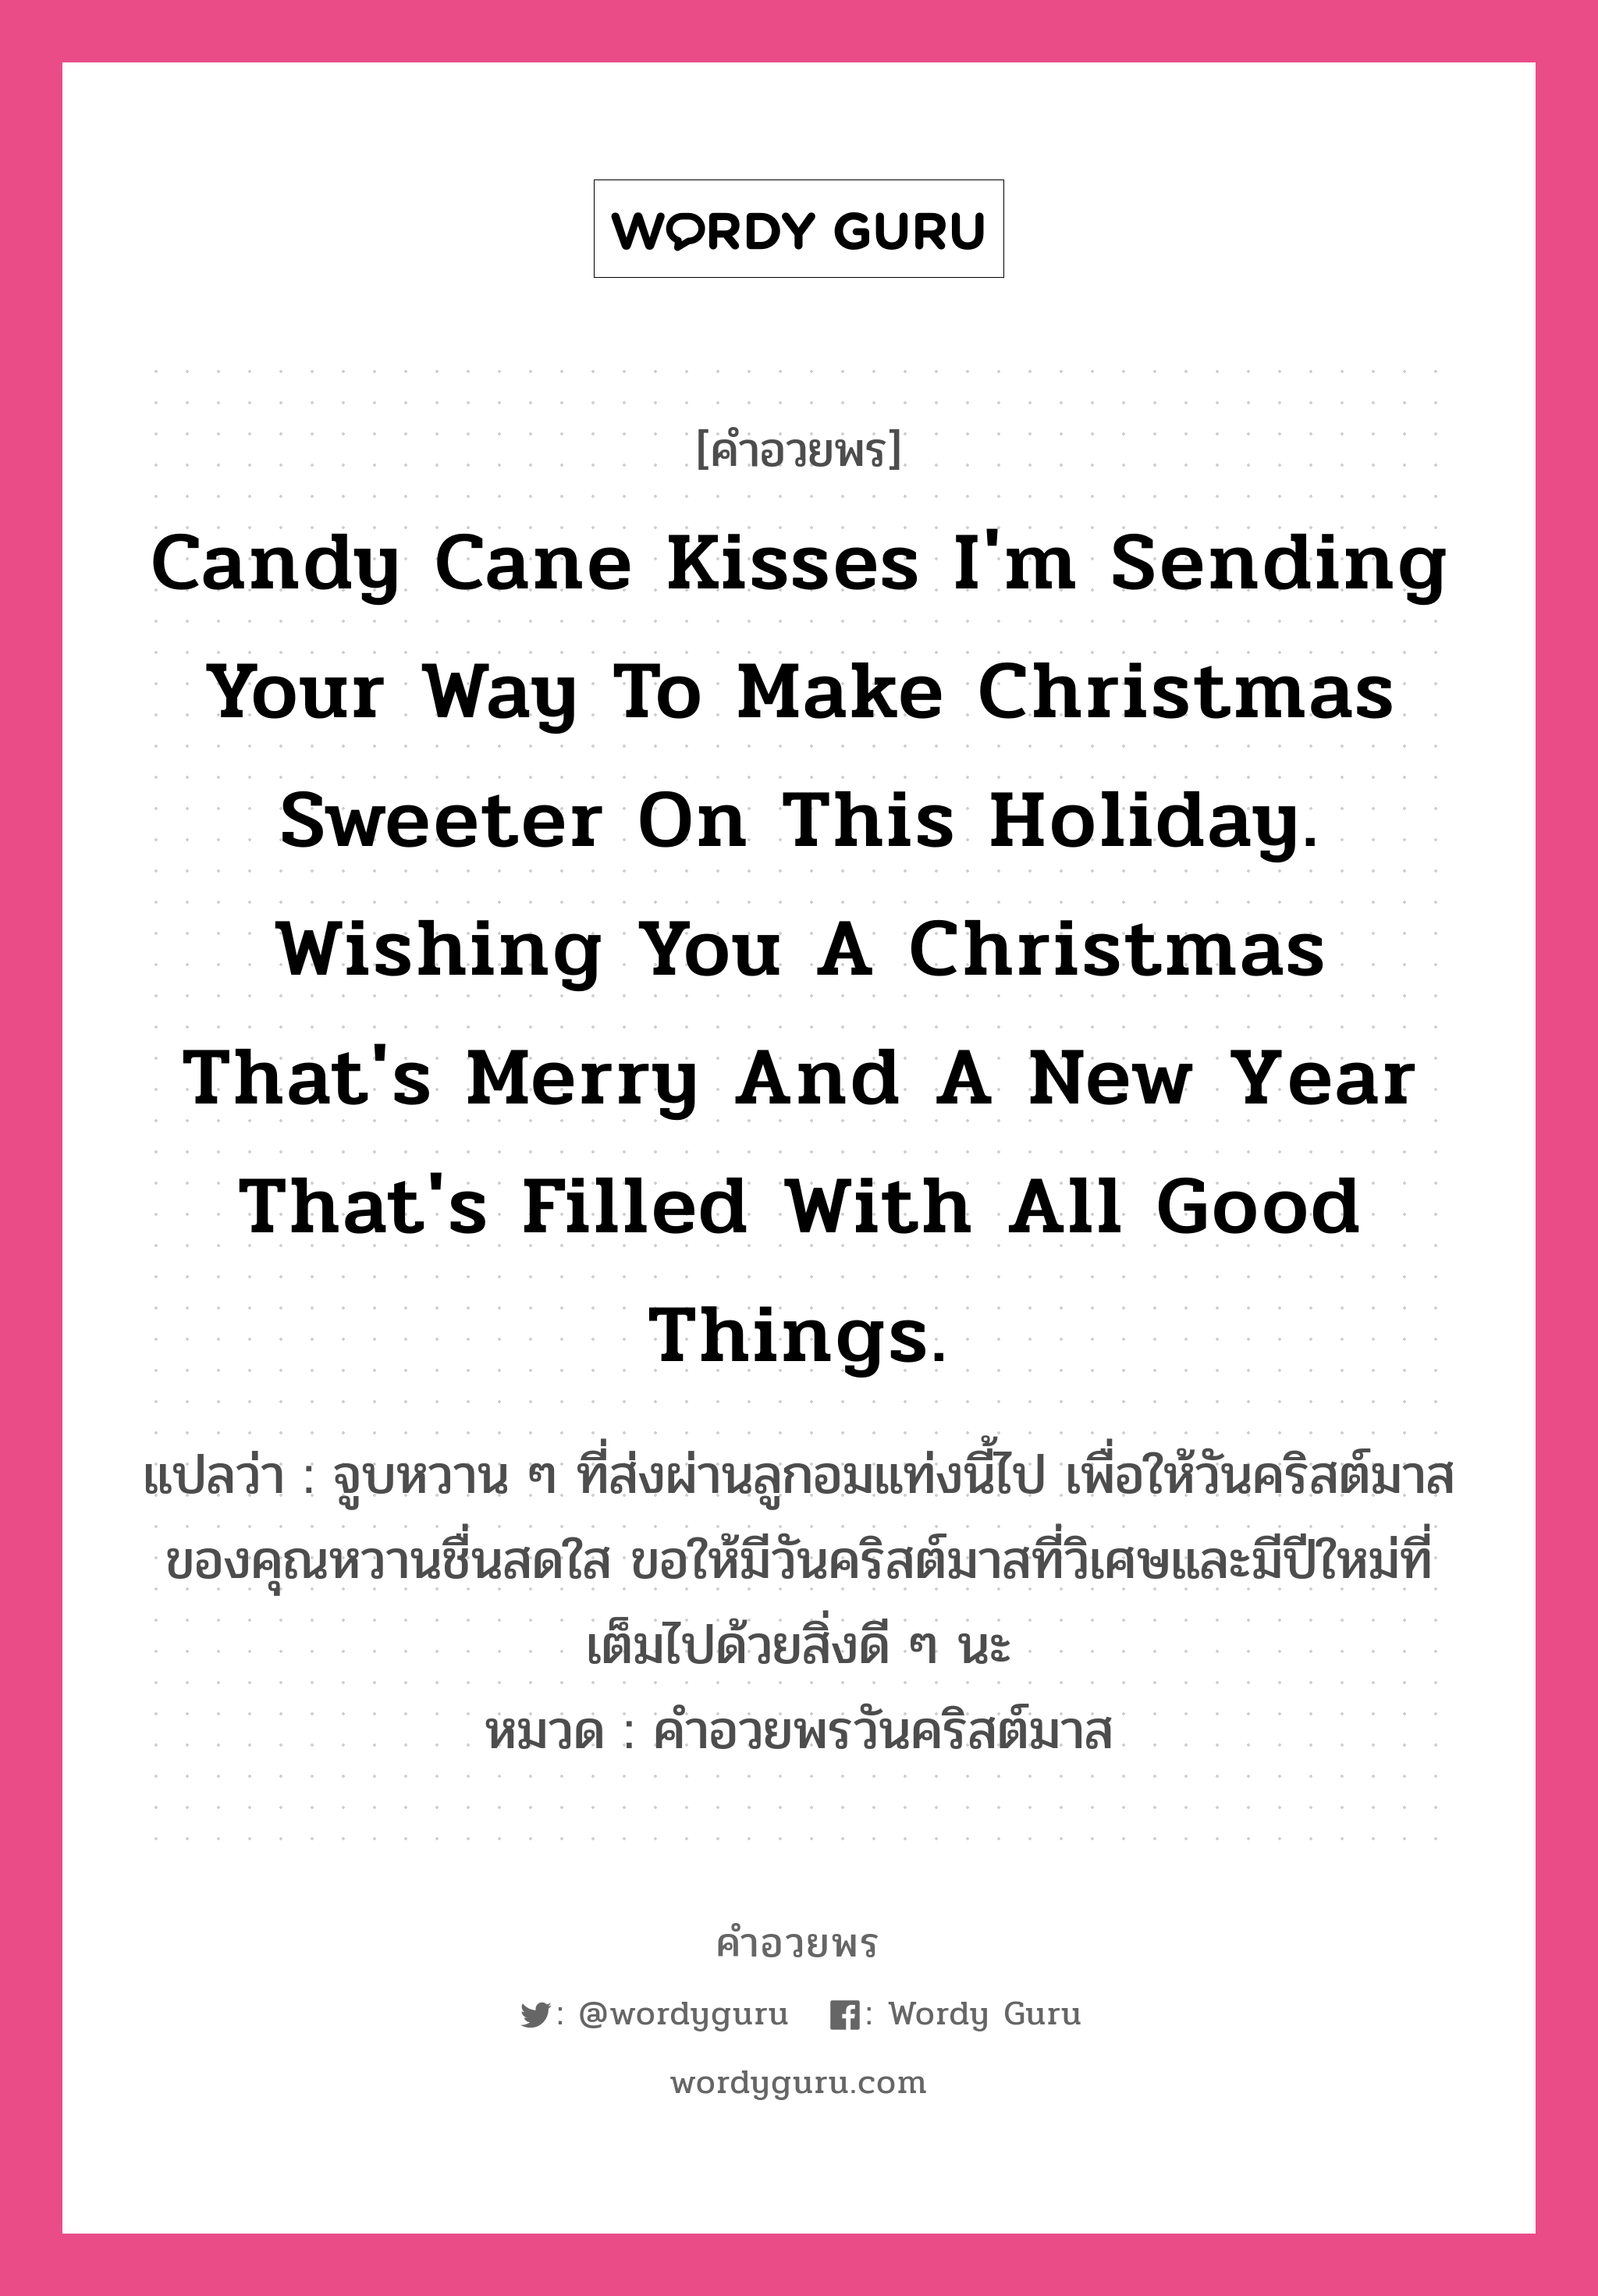 Candy cane kisses I'm sending your way to make Christmas sweeter on this holiday. Wishing you a Christmas that's merry and a new year that's filled with all good things. คำศัพท์ในกลุ่มประเภท คำอวยพรวันคริสต์มาส, แปลว่า จูบหวาน ๆ ที่ส่งผ่านลูกอมแท่งนี้ไป เพื่อให้วันคริสต์มาสของคุณหวานชื่นสดใส ขอให้มีวันคริสต์มาสที่วิเศษและมีปีใหม่ที่เต็มไปด้วยสิ่งดี ๆ นะ หมวด คำอวยพรวันคริสต์มาส หมวด คำอวยพรวันคริสต์มาส